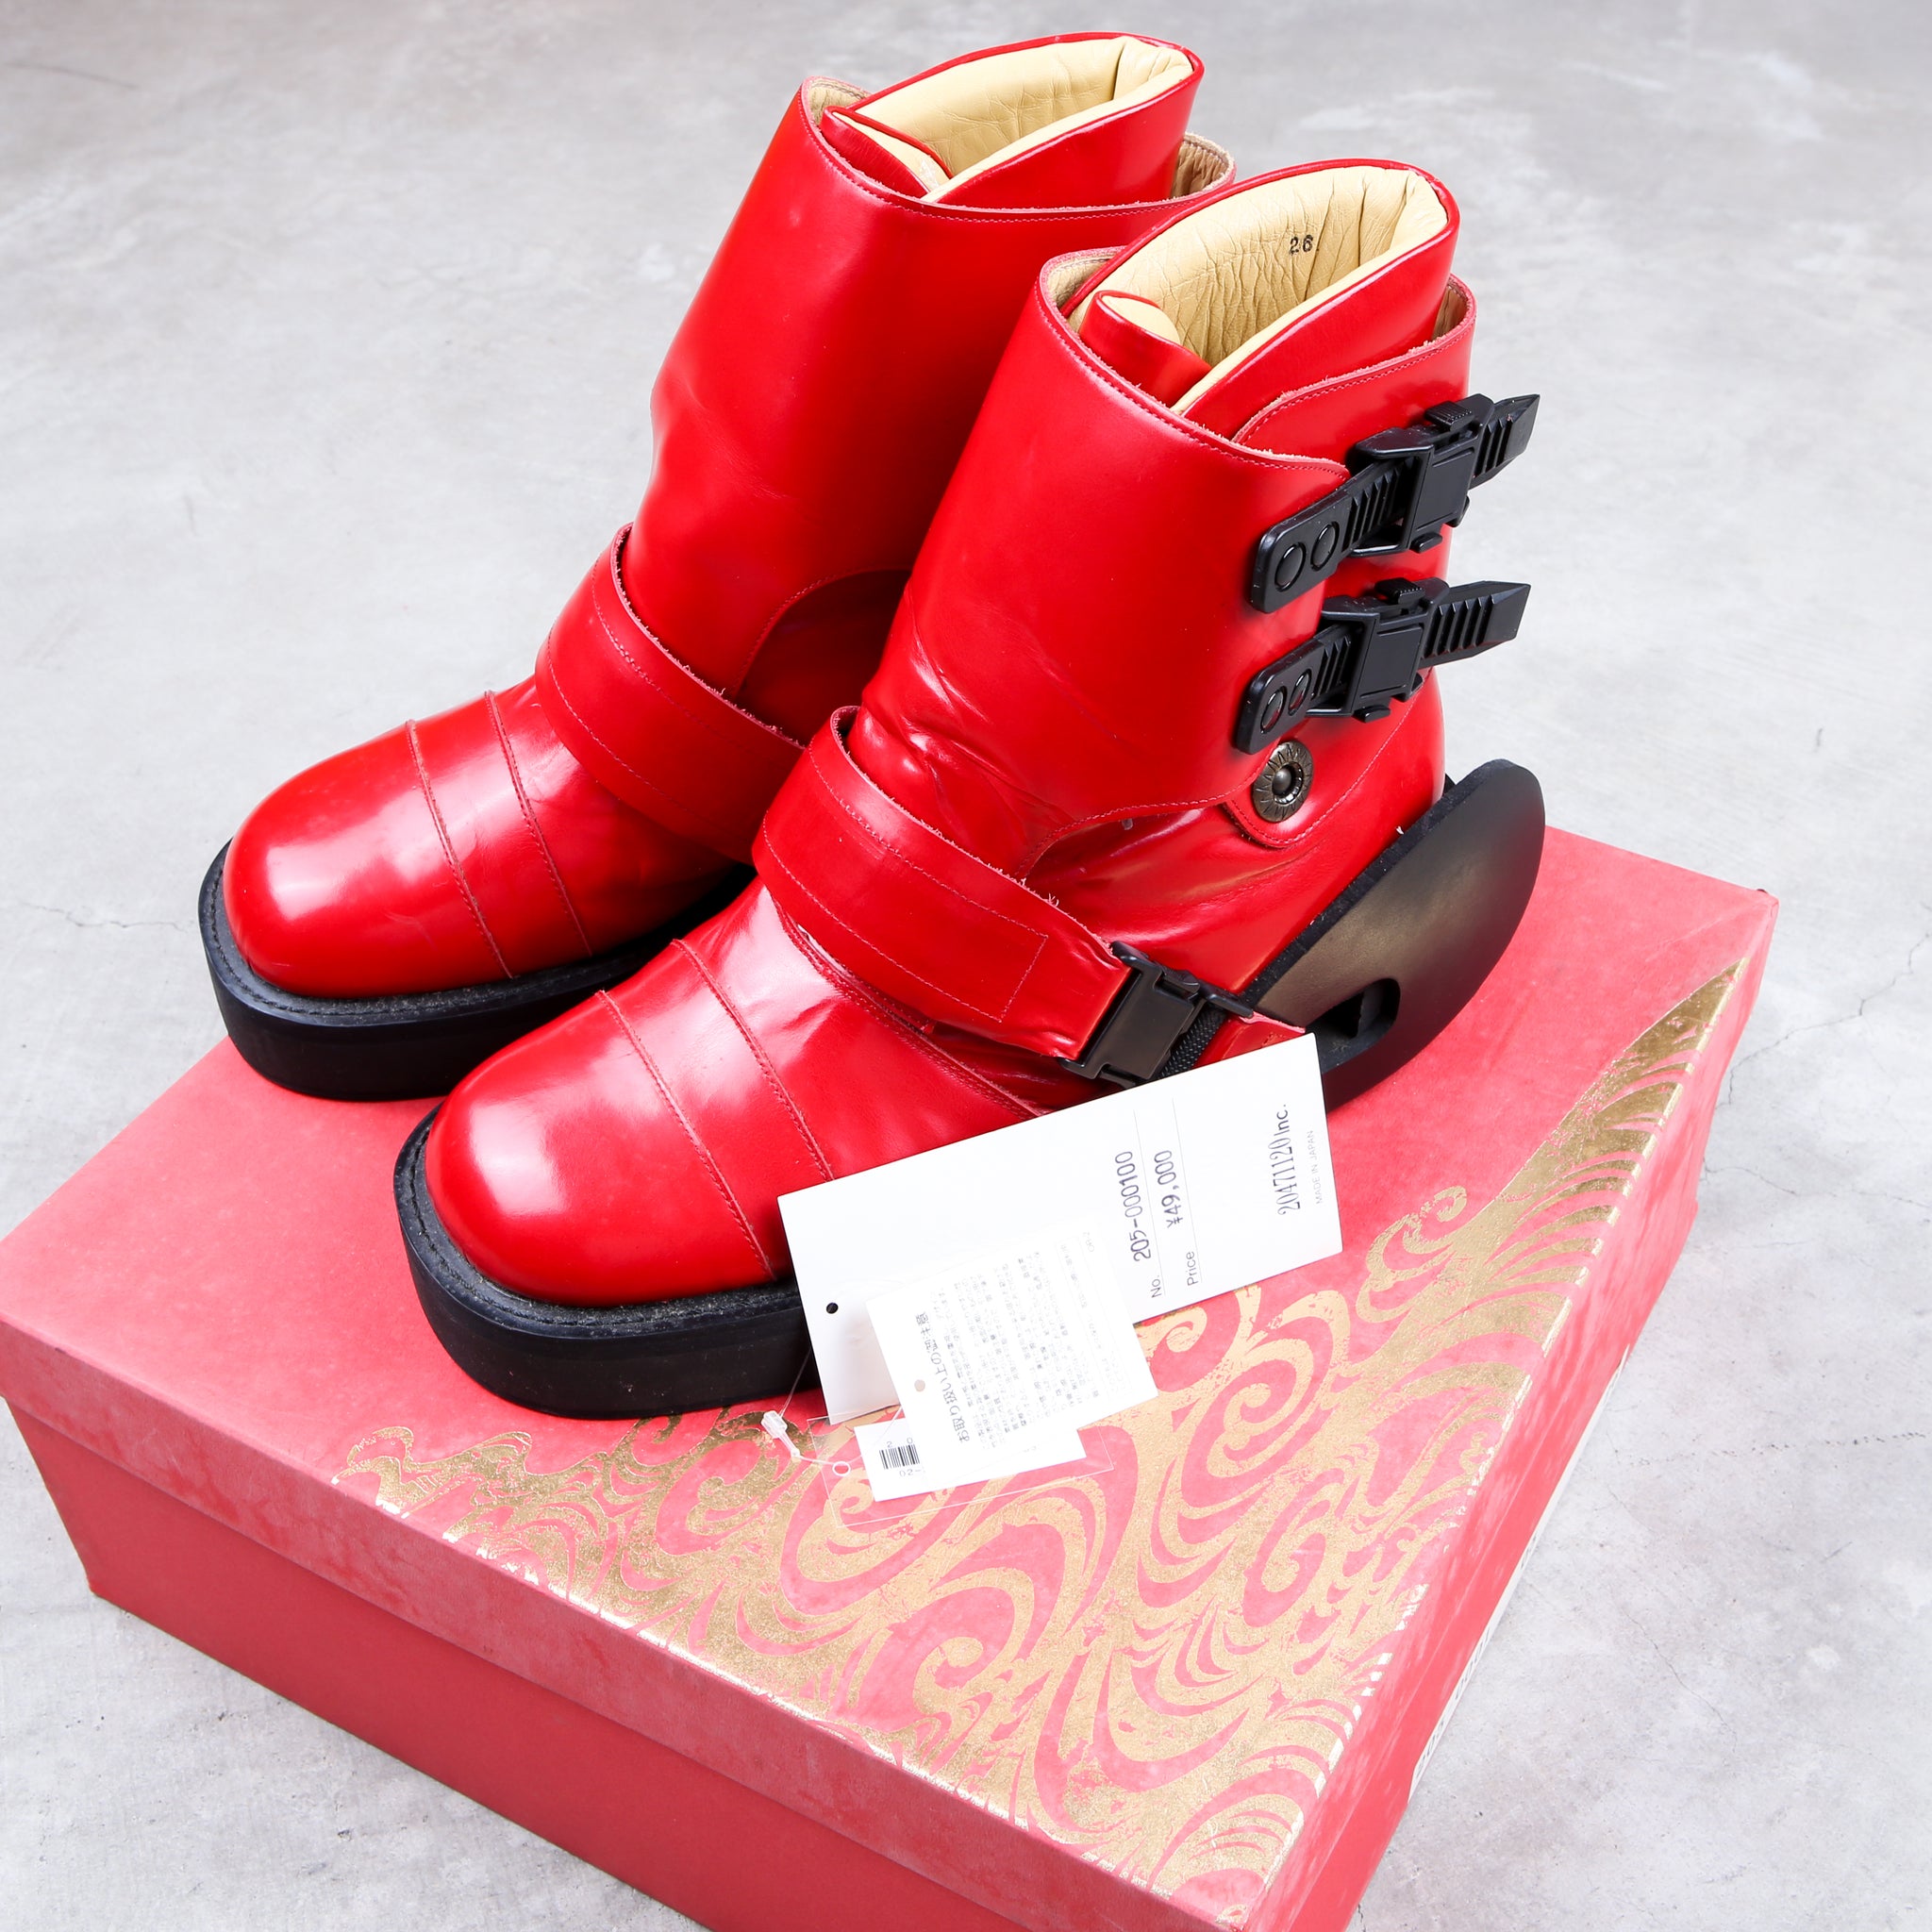 20471120 Red Ski Boots AW/96 – akaibu.co